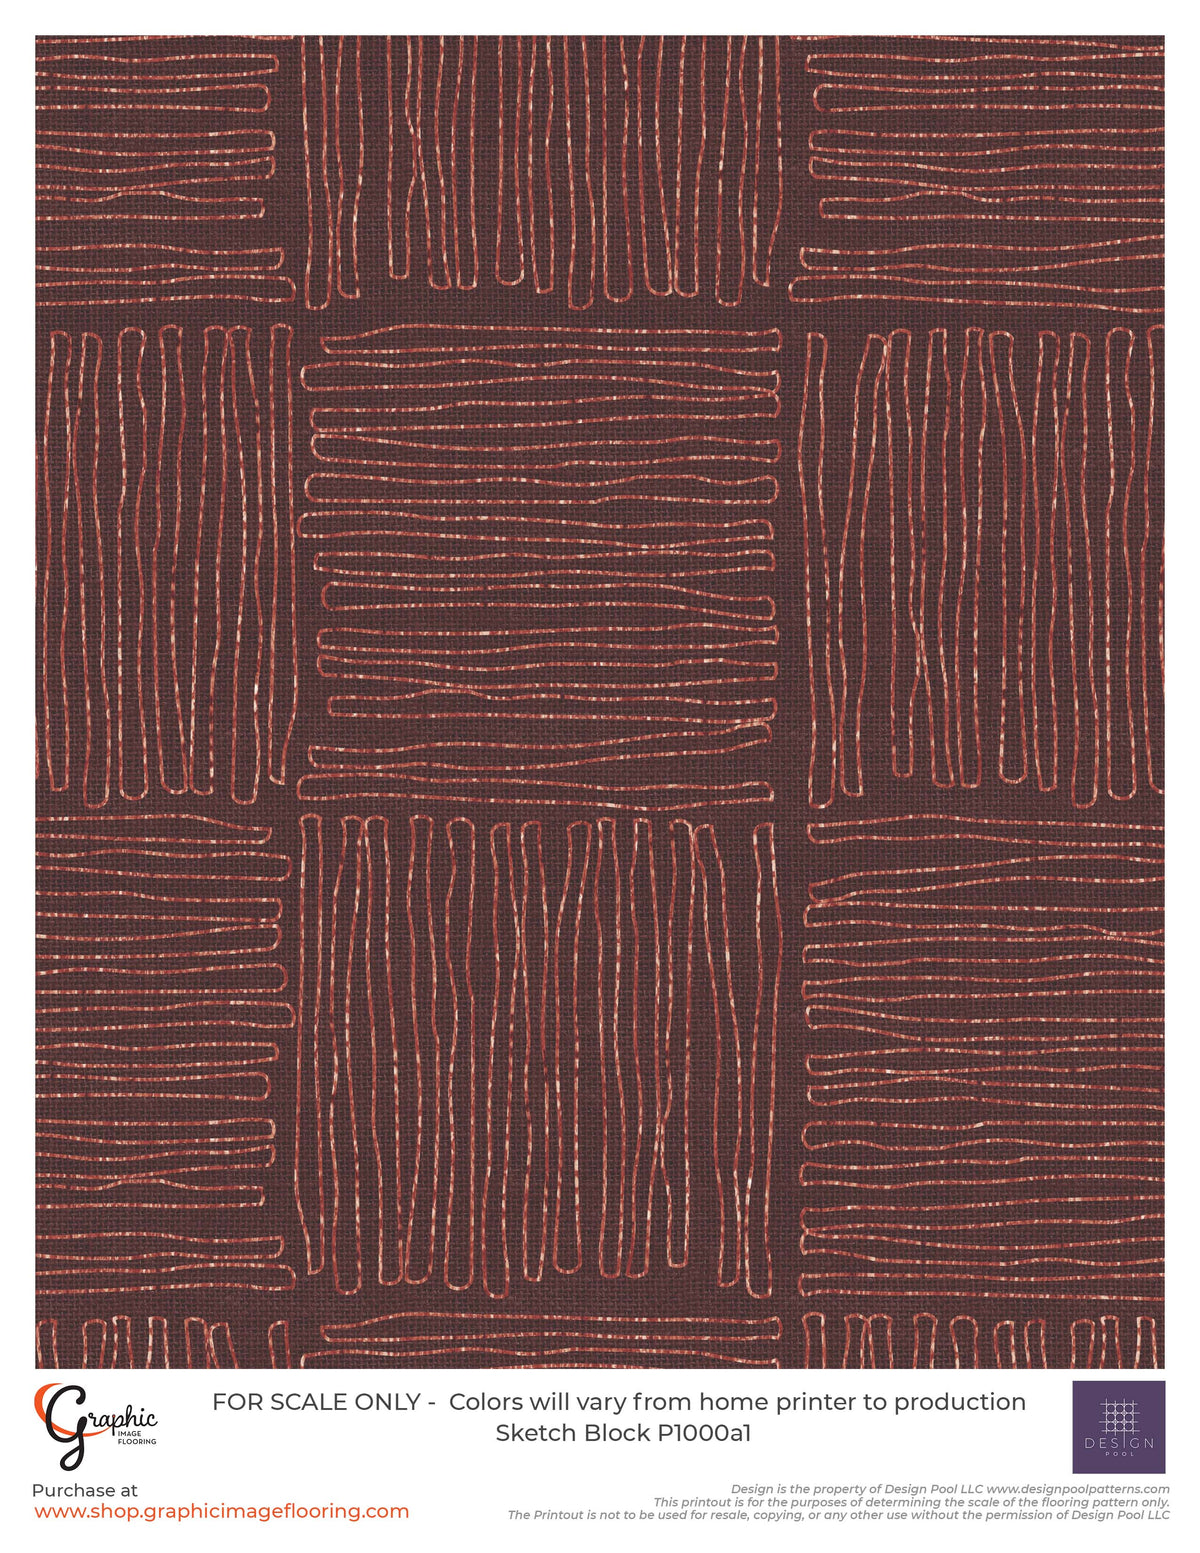 Sketch Block (P1000)